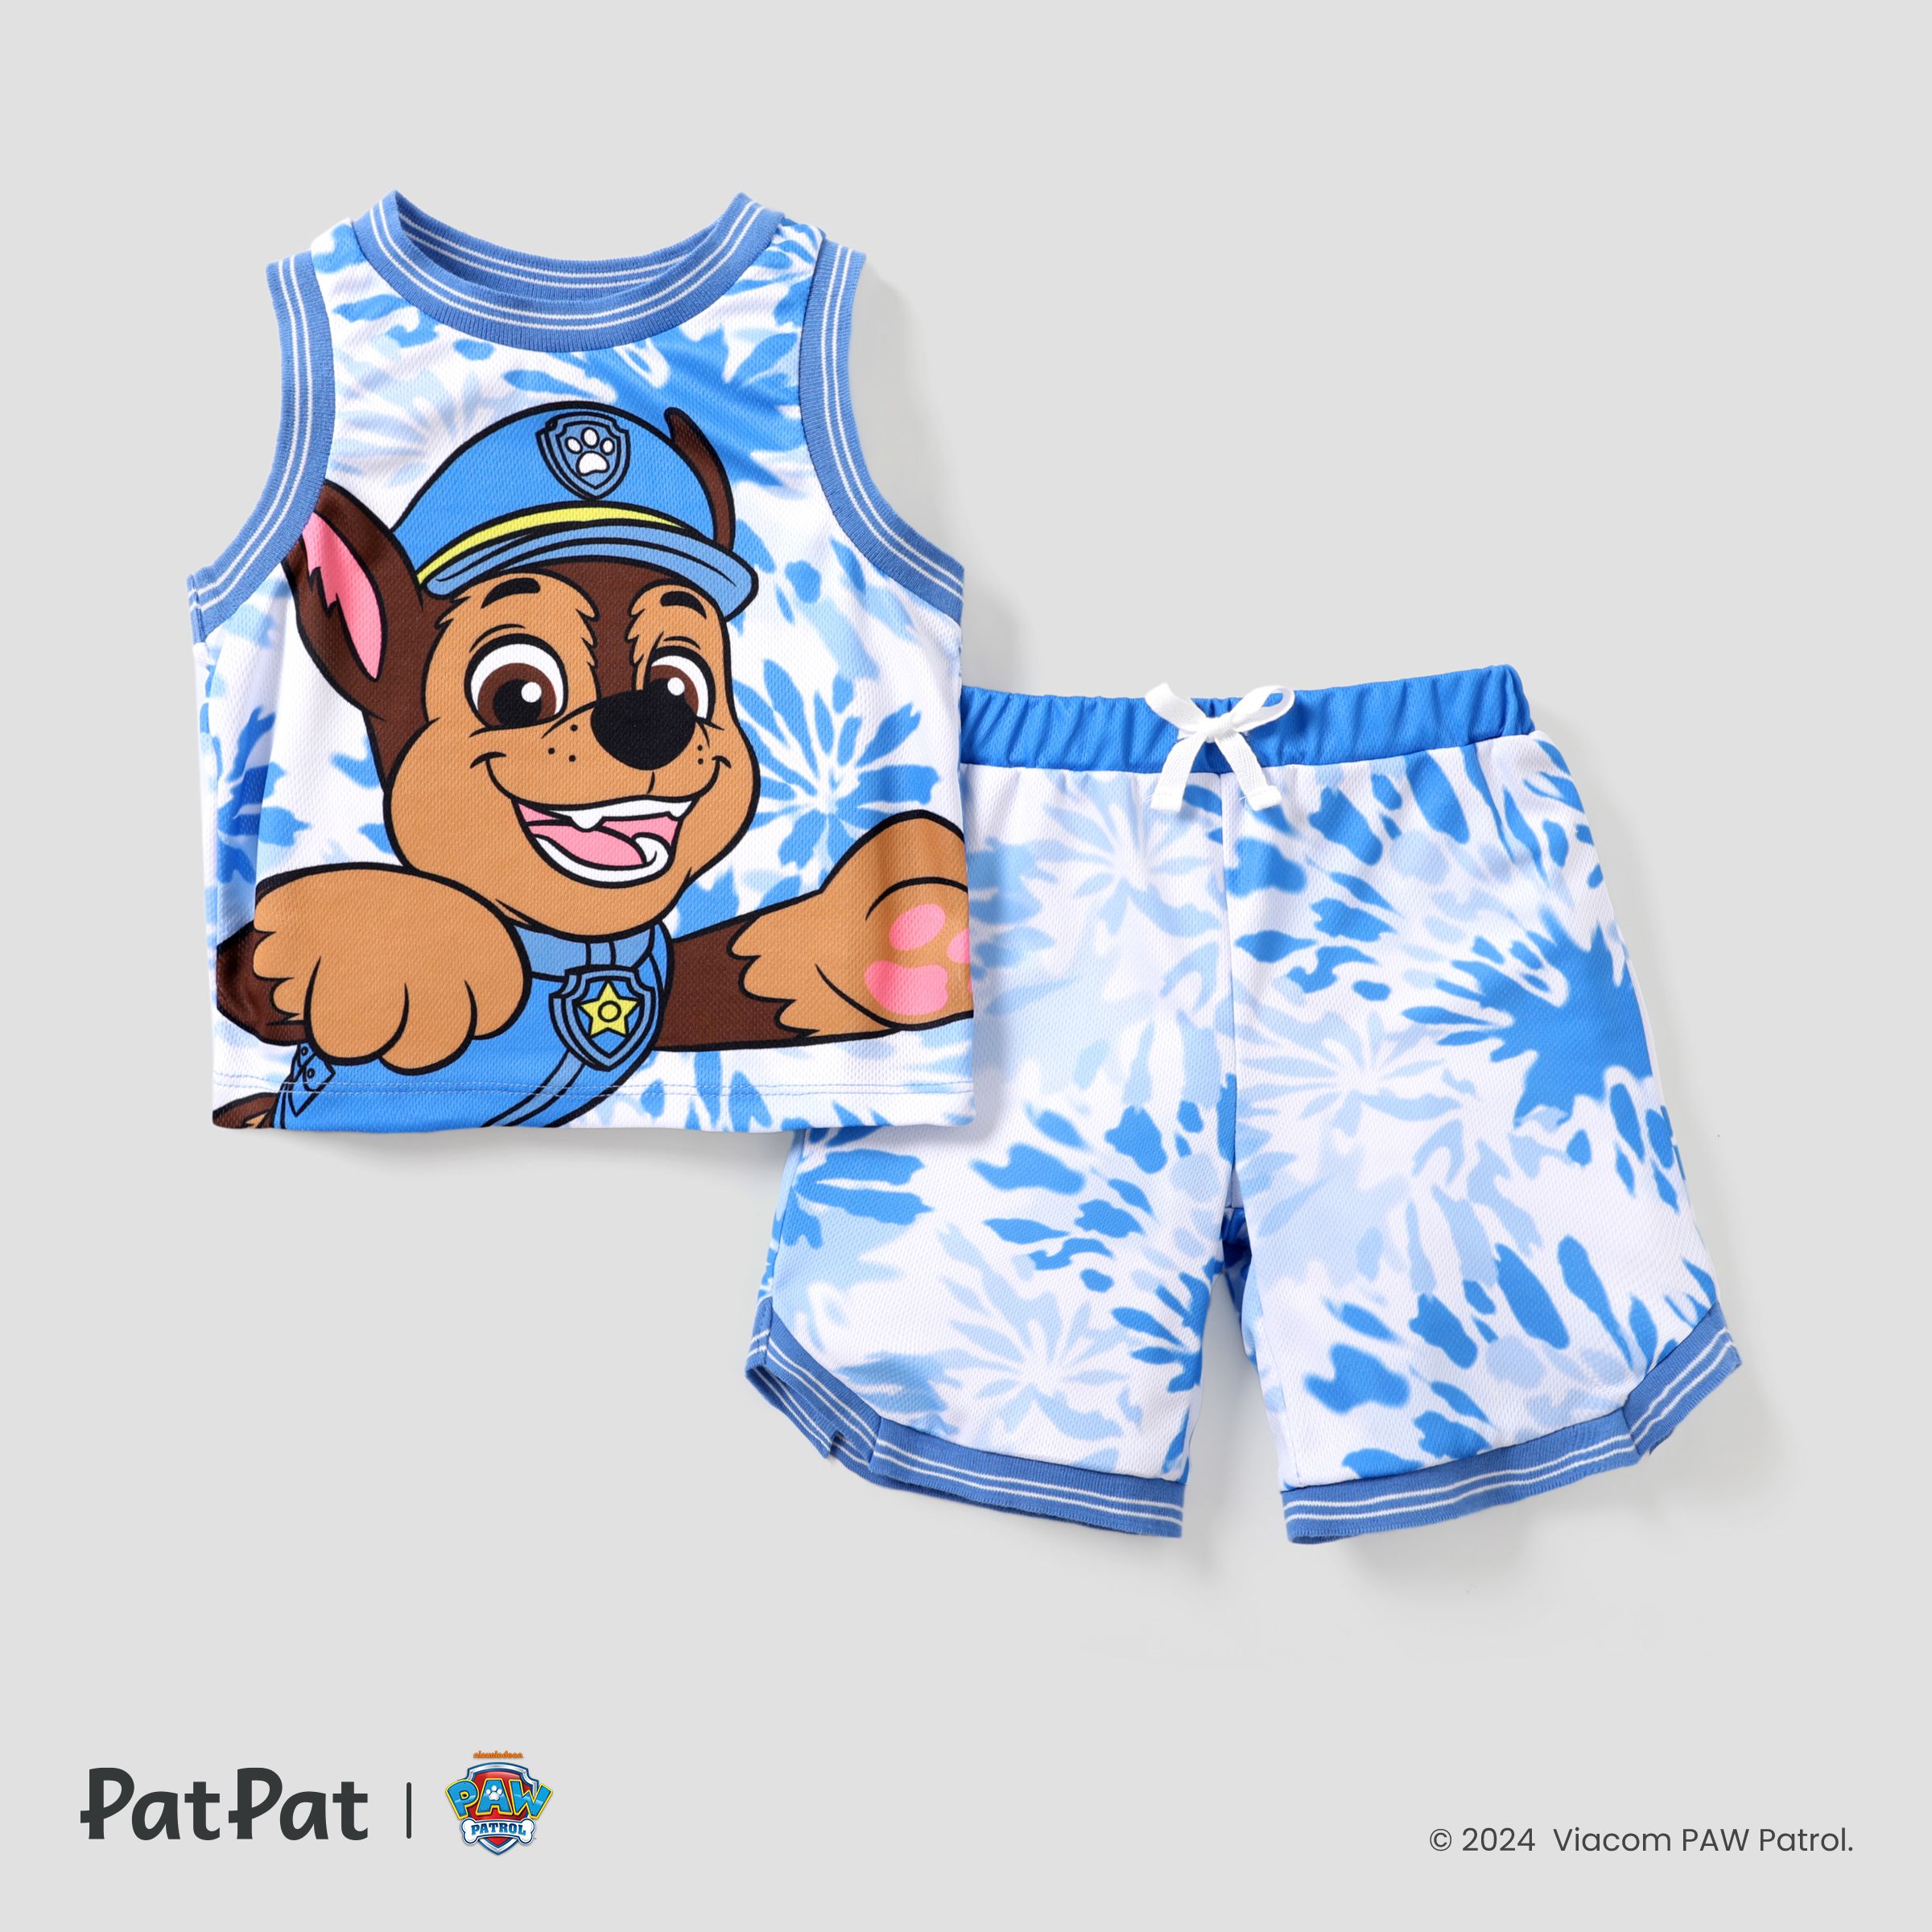 PAW Patrol Boys/Girls Children's Sports And Leisure Tie-Dye Print Effect Flat Machine Webbing Basketball Jersey Sets